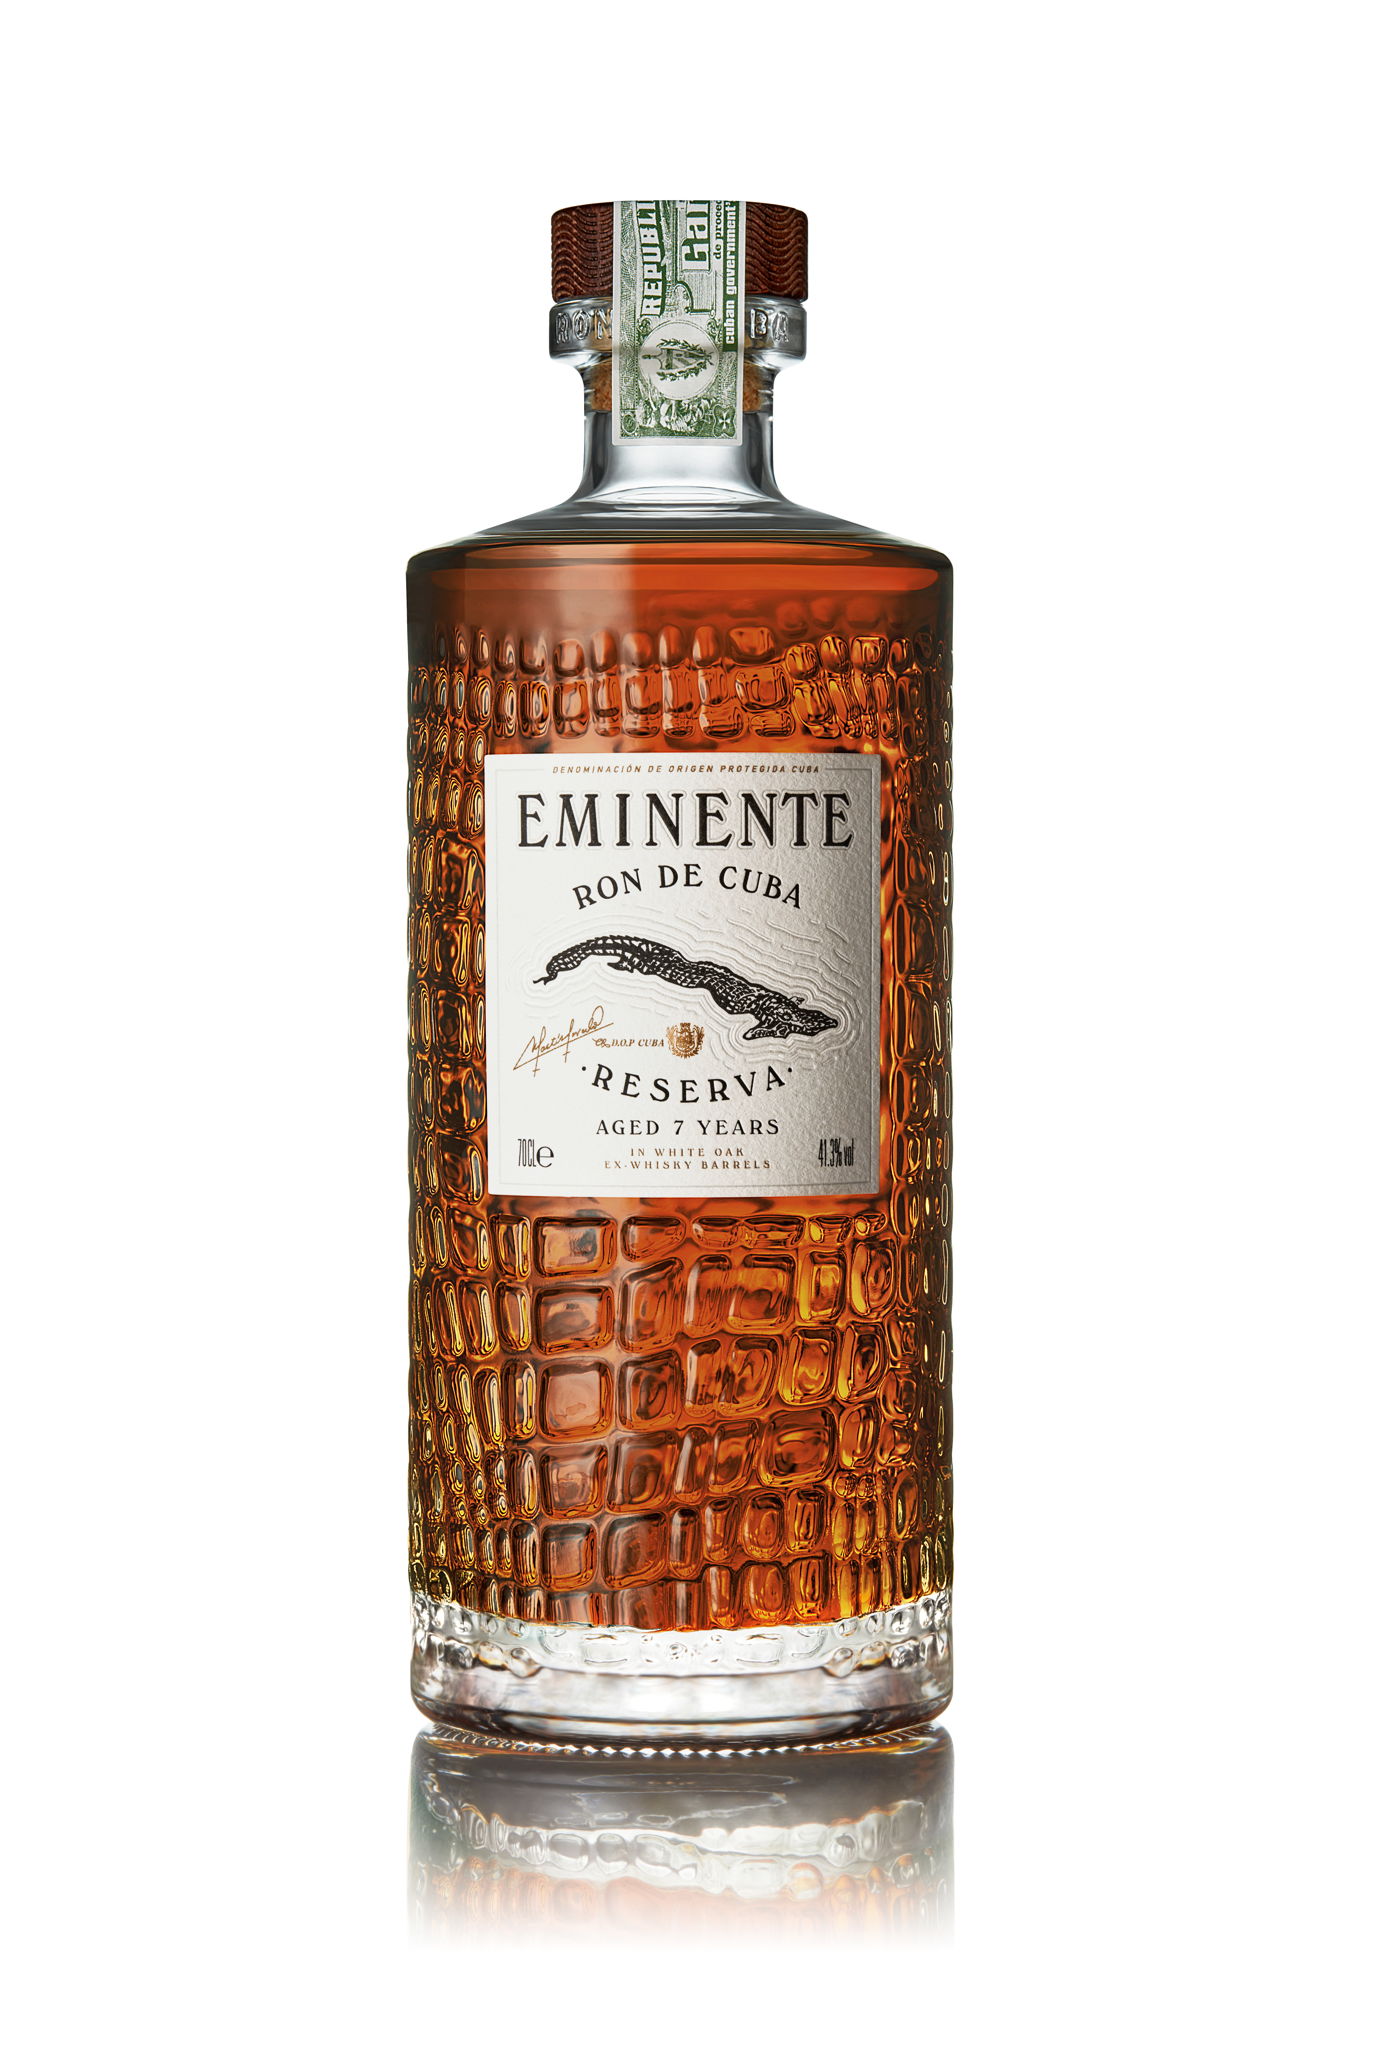 EMINENTE - Rum Enterprise Trademark Registration